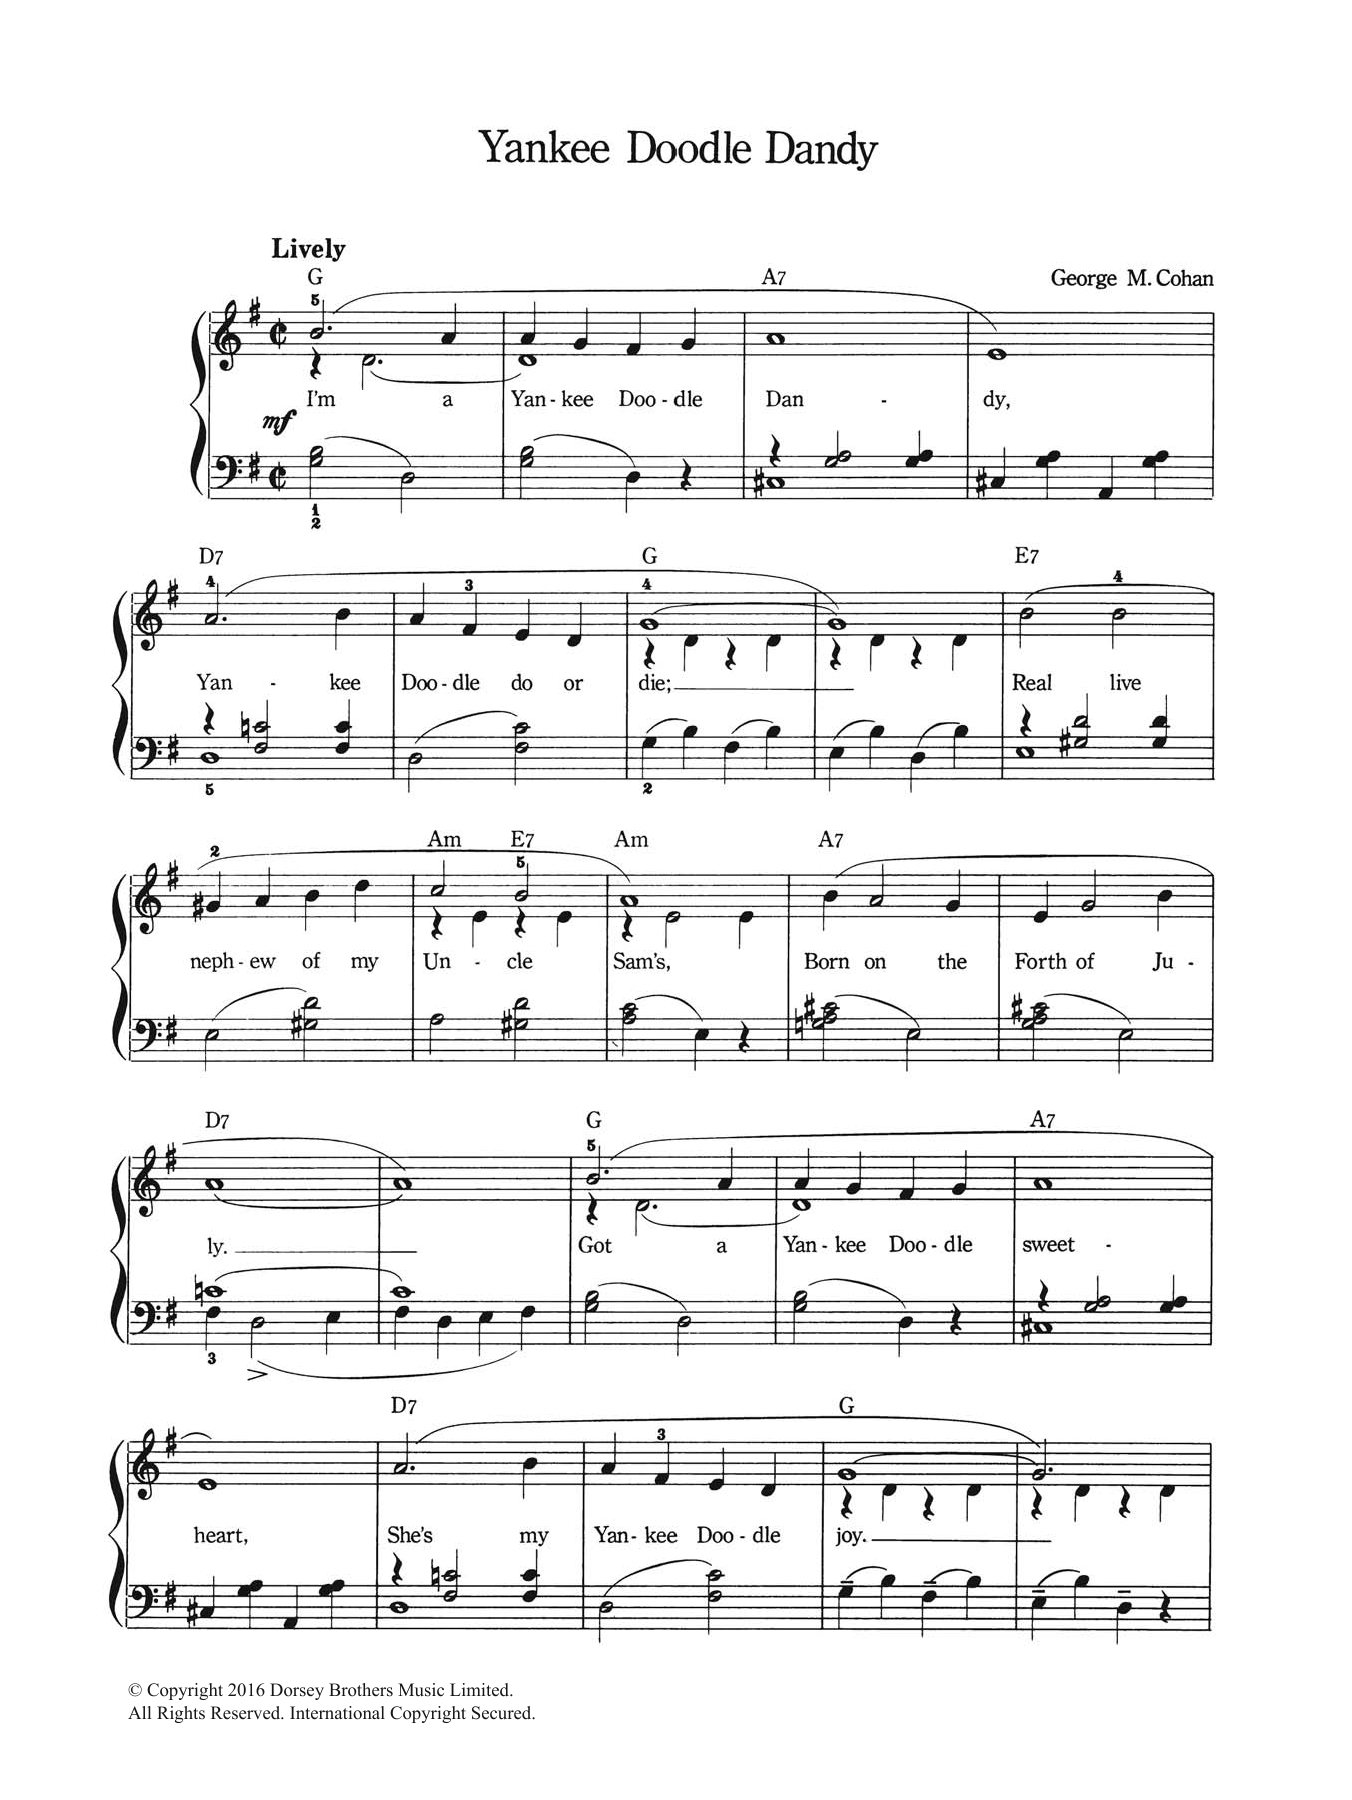 Yankee Doodle Dandy sheet music